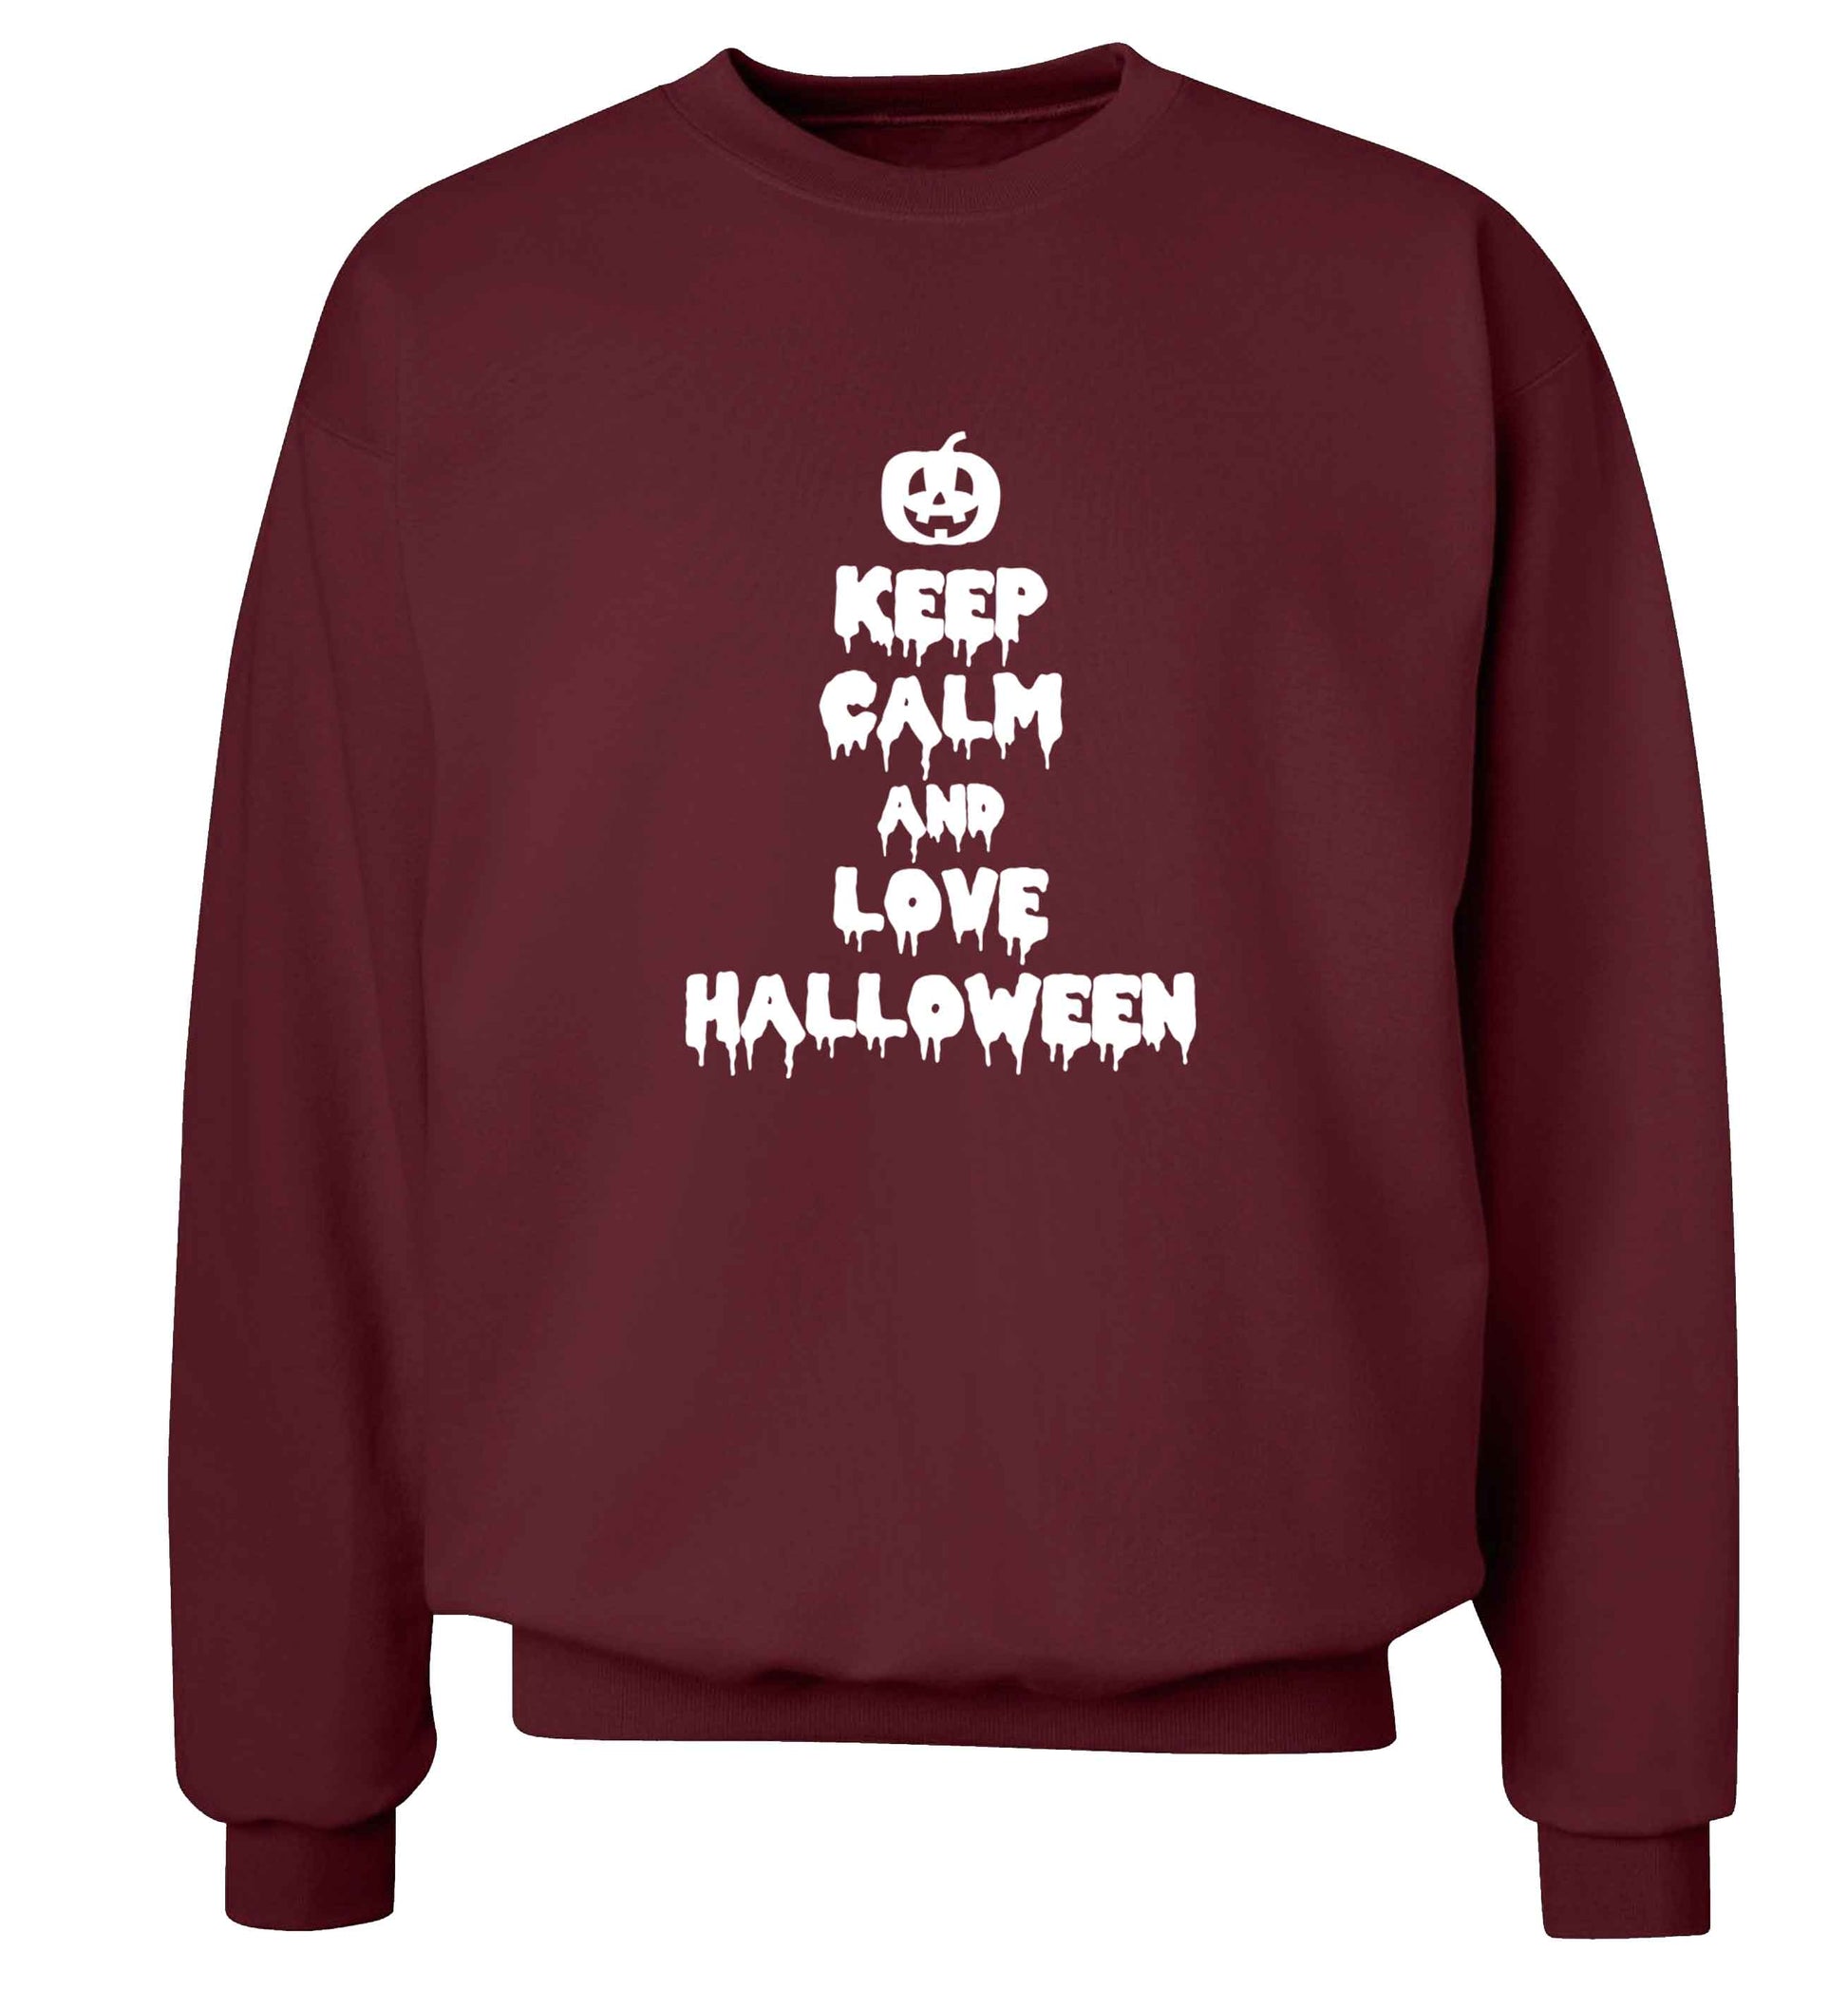 Keep calm and love halloween adult's unisex maroon sweater 2XL